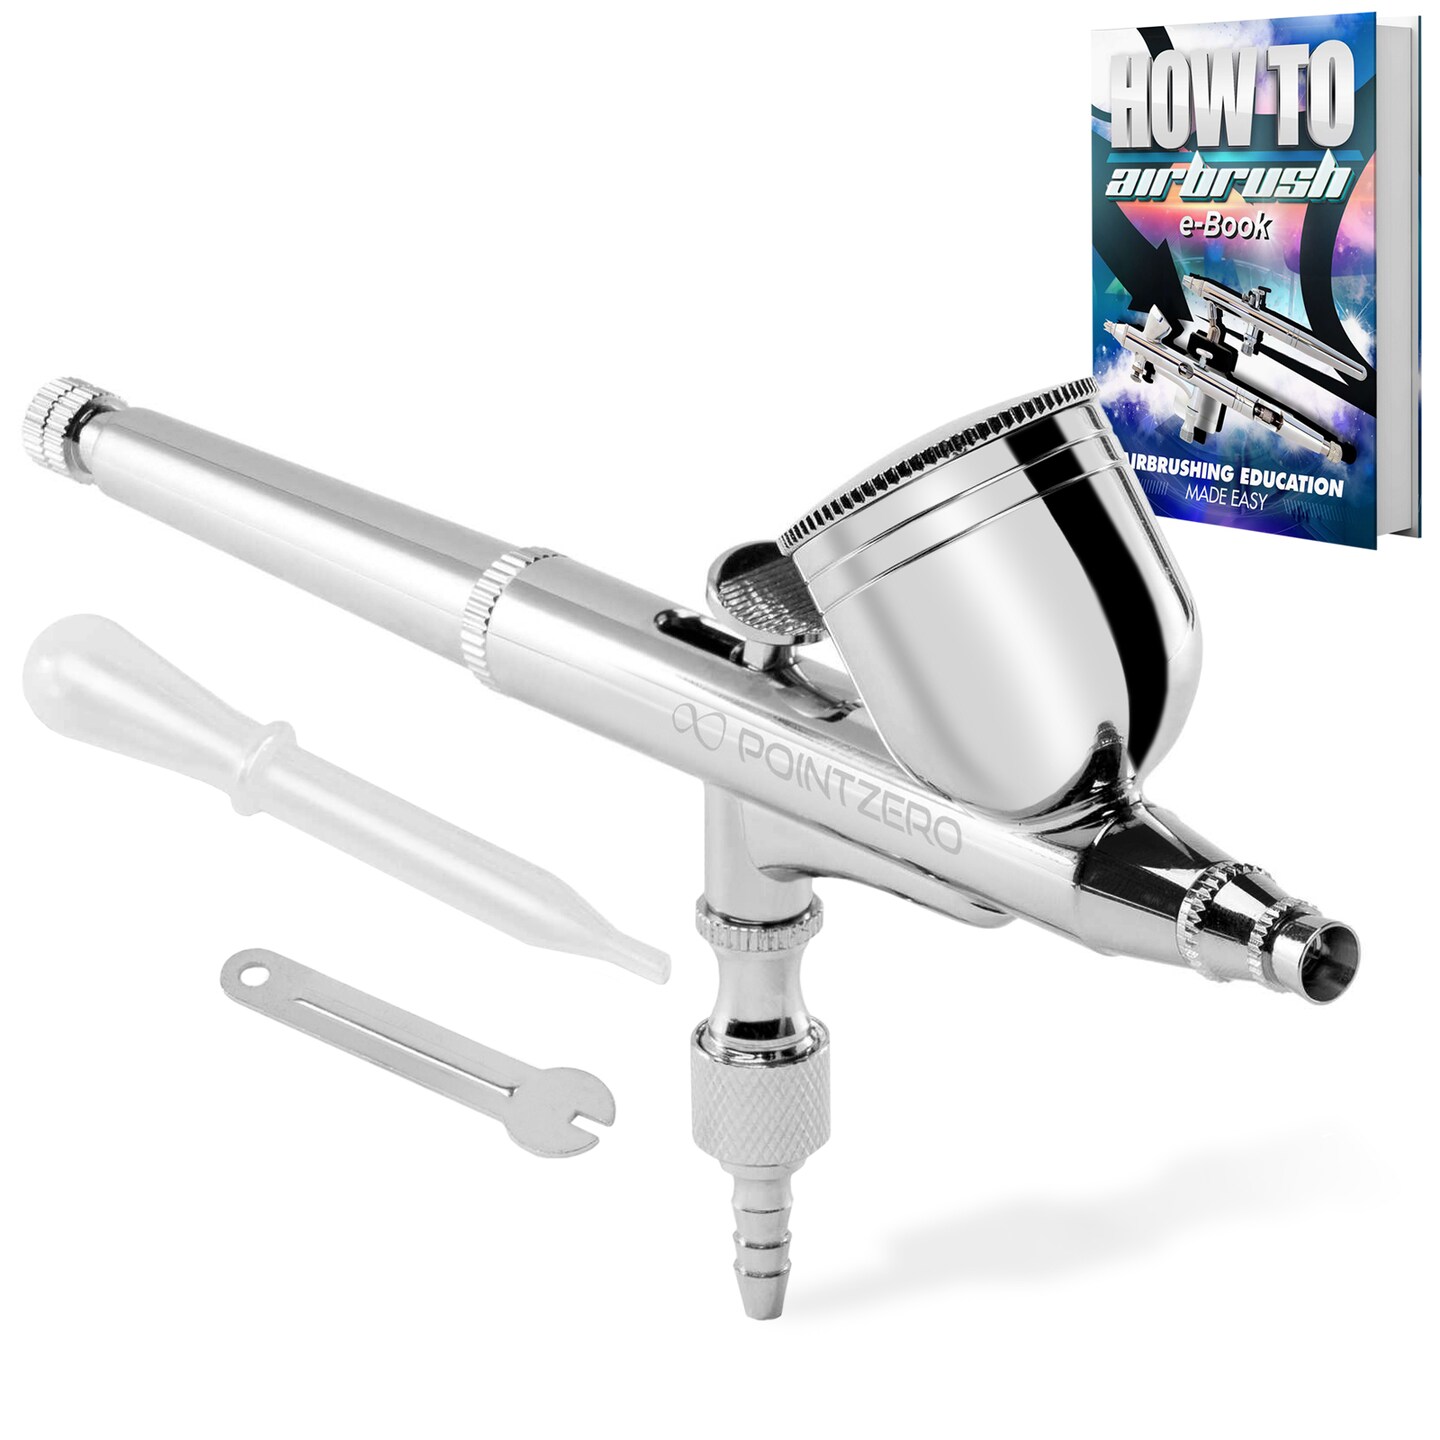 PointZero Dual-action 7cc Gravity-feed Airbrush Set - .3mm Nozzle